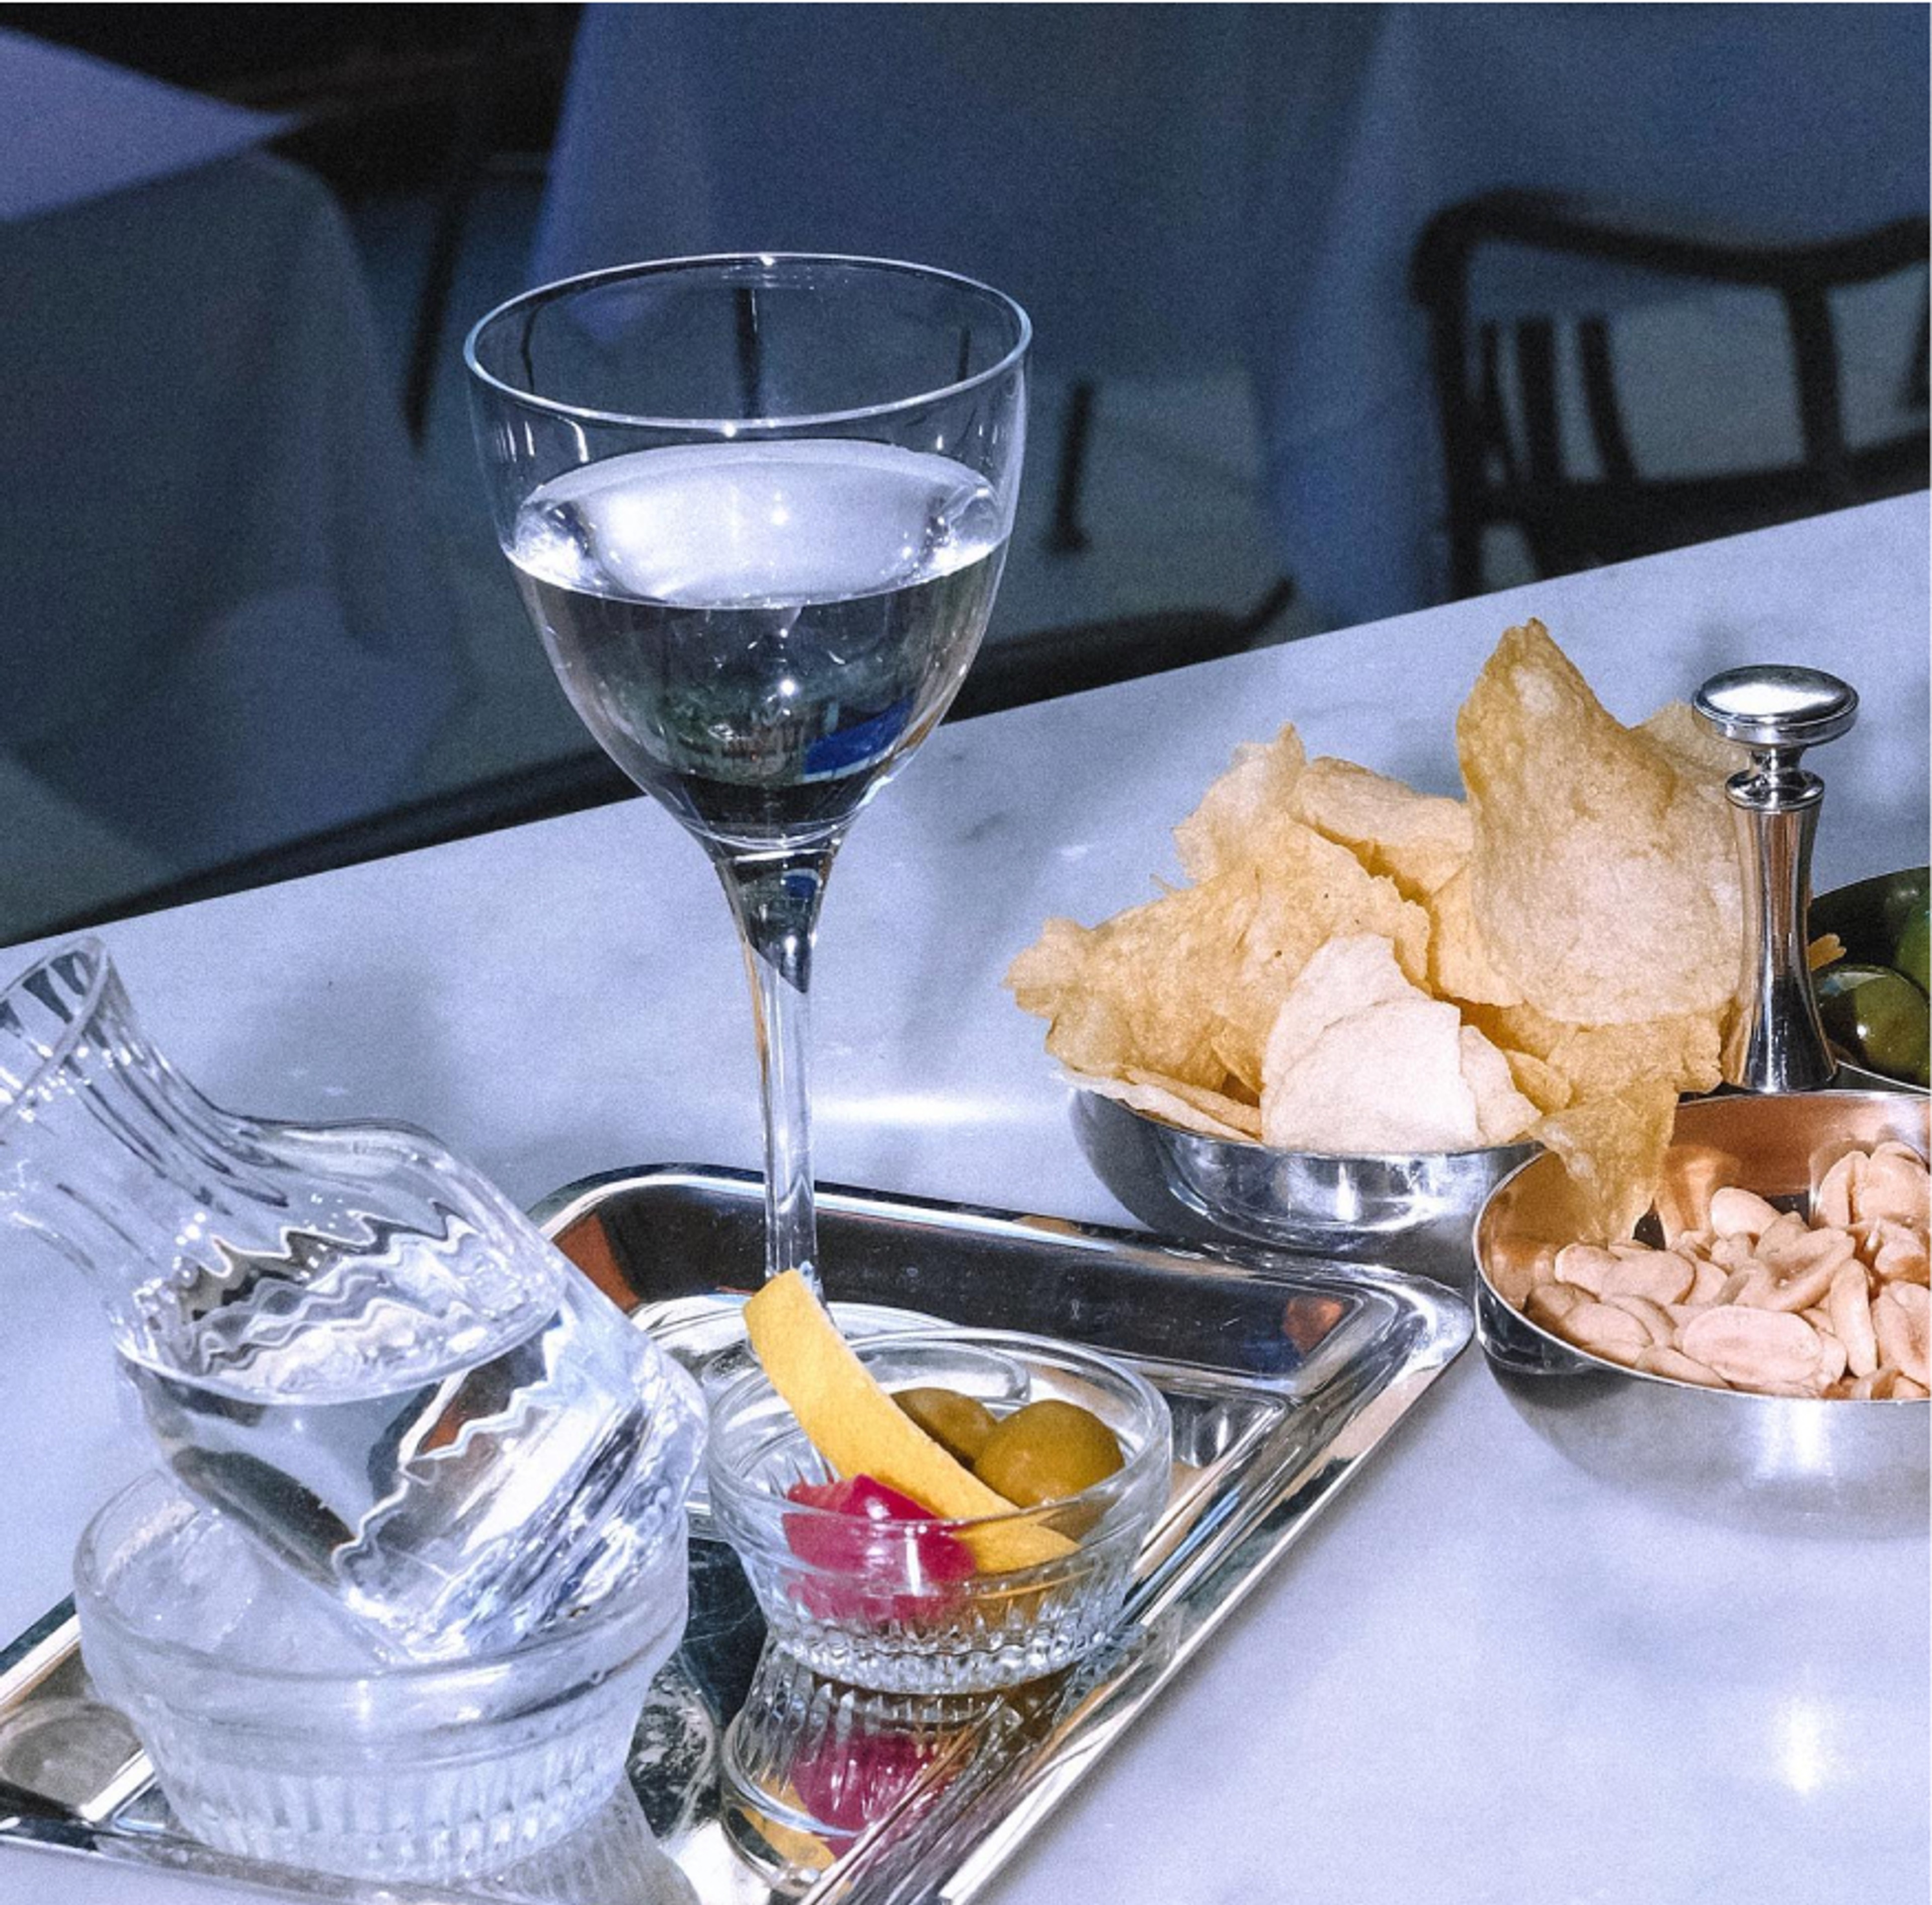 body martini set on table